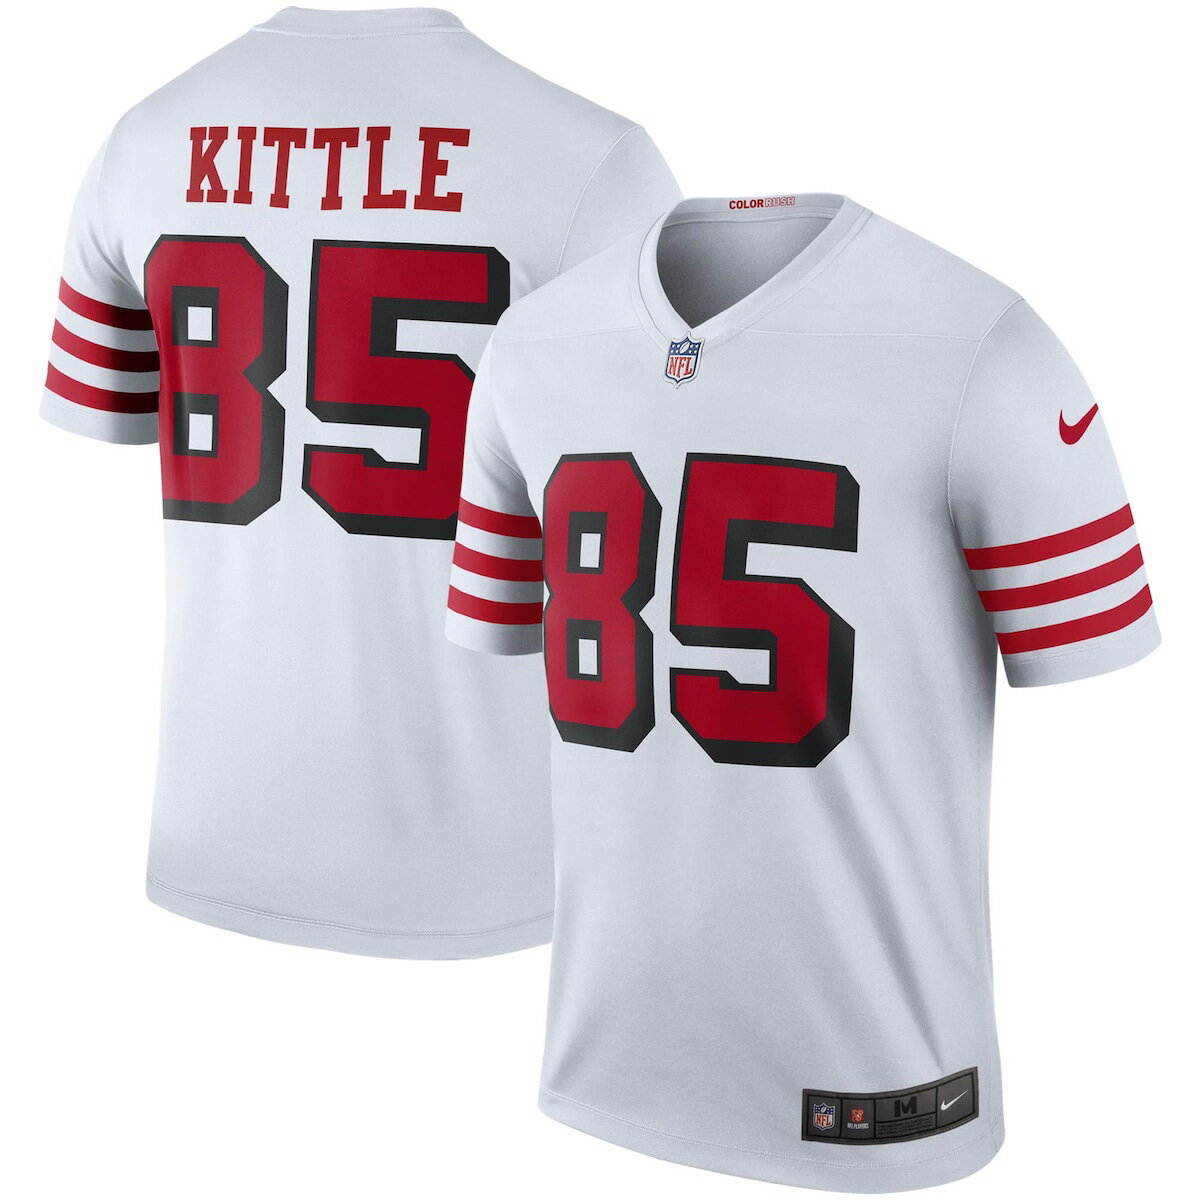 NFL 49ers ジョージ・キトル ユニフォーム Nike ナイキ メンズ ホワイト (Men's Nike Legend Jersey)